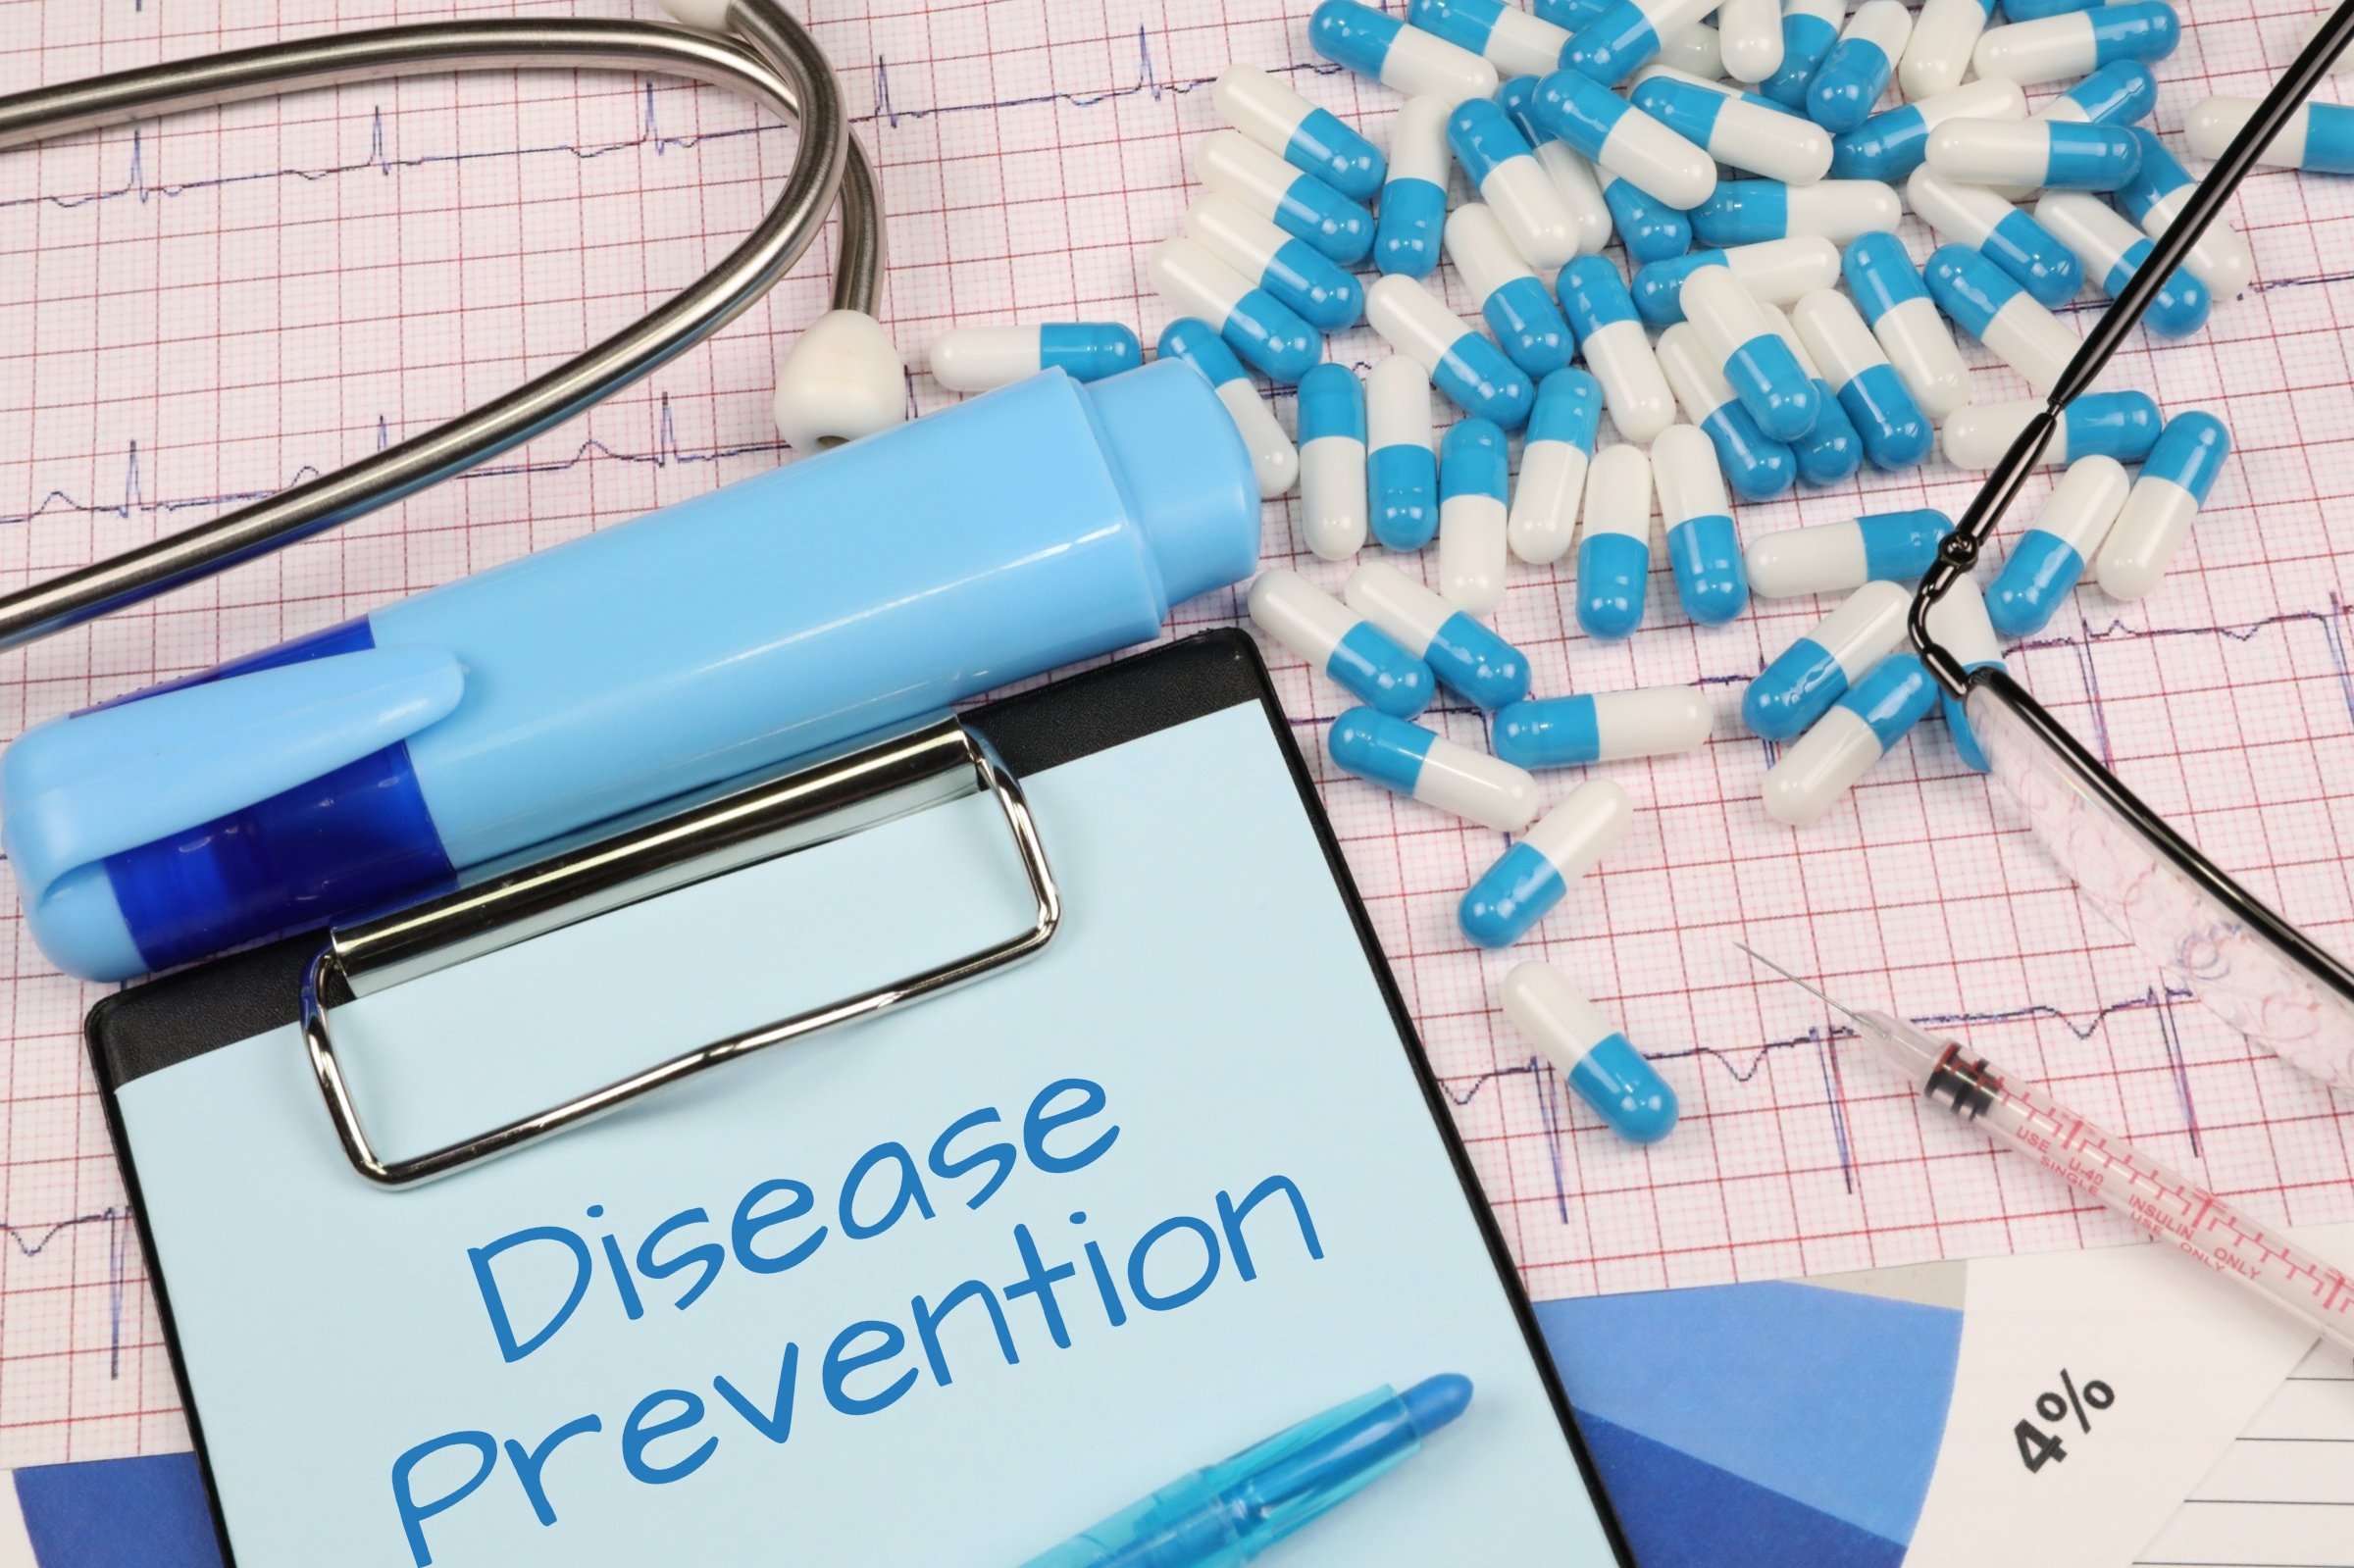 disease prevention